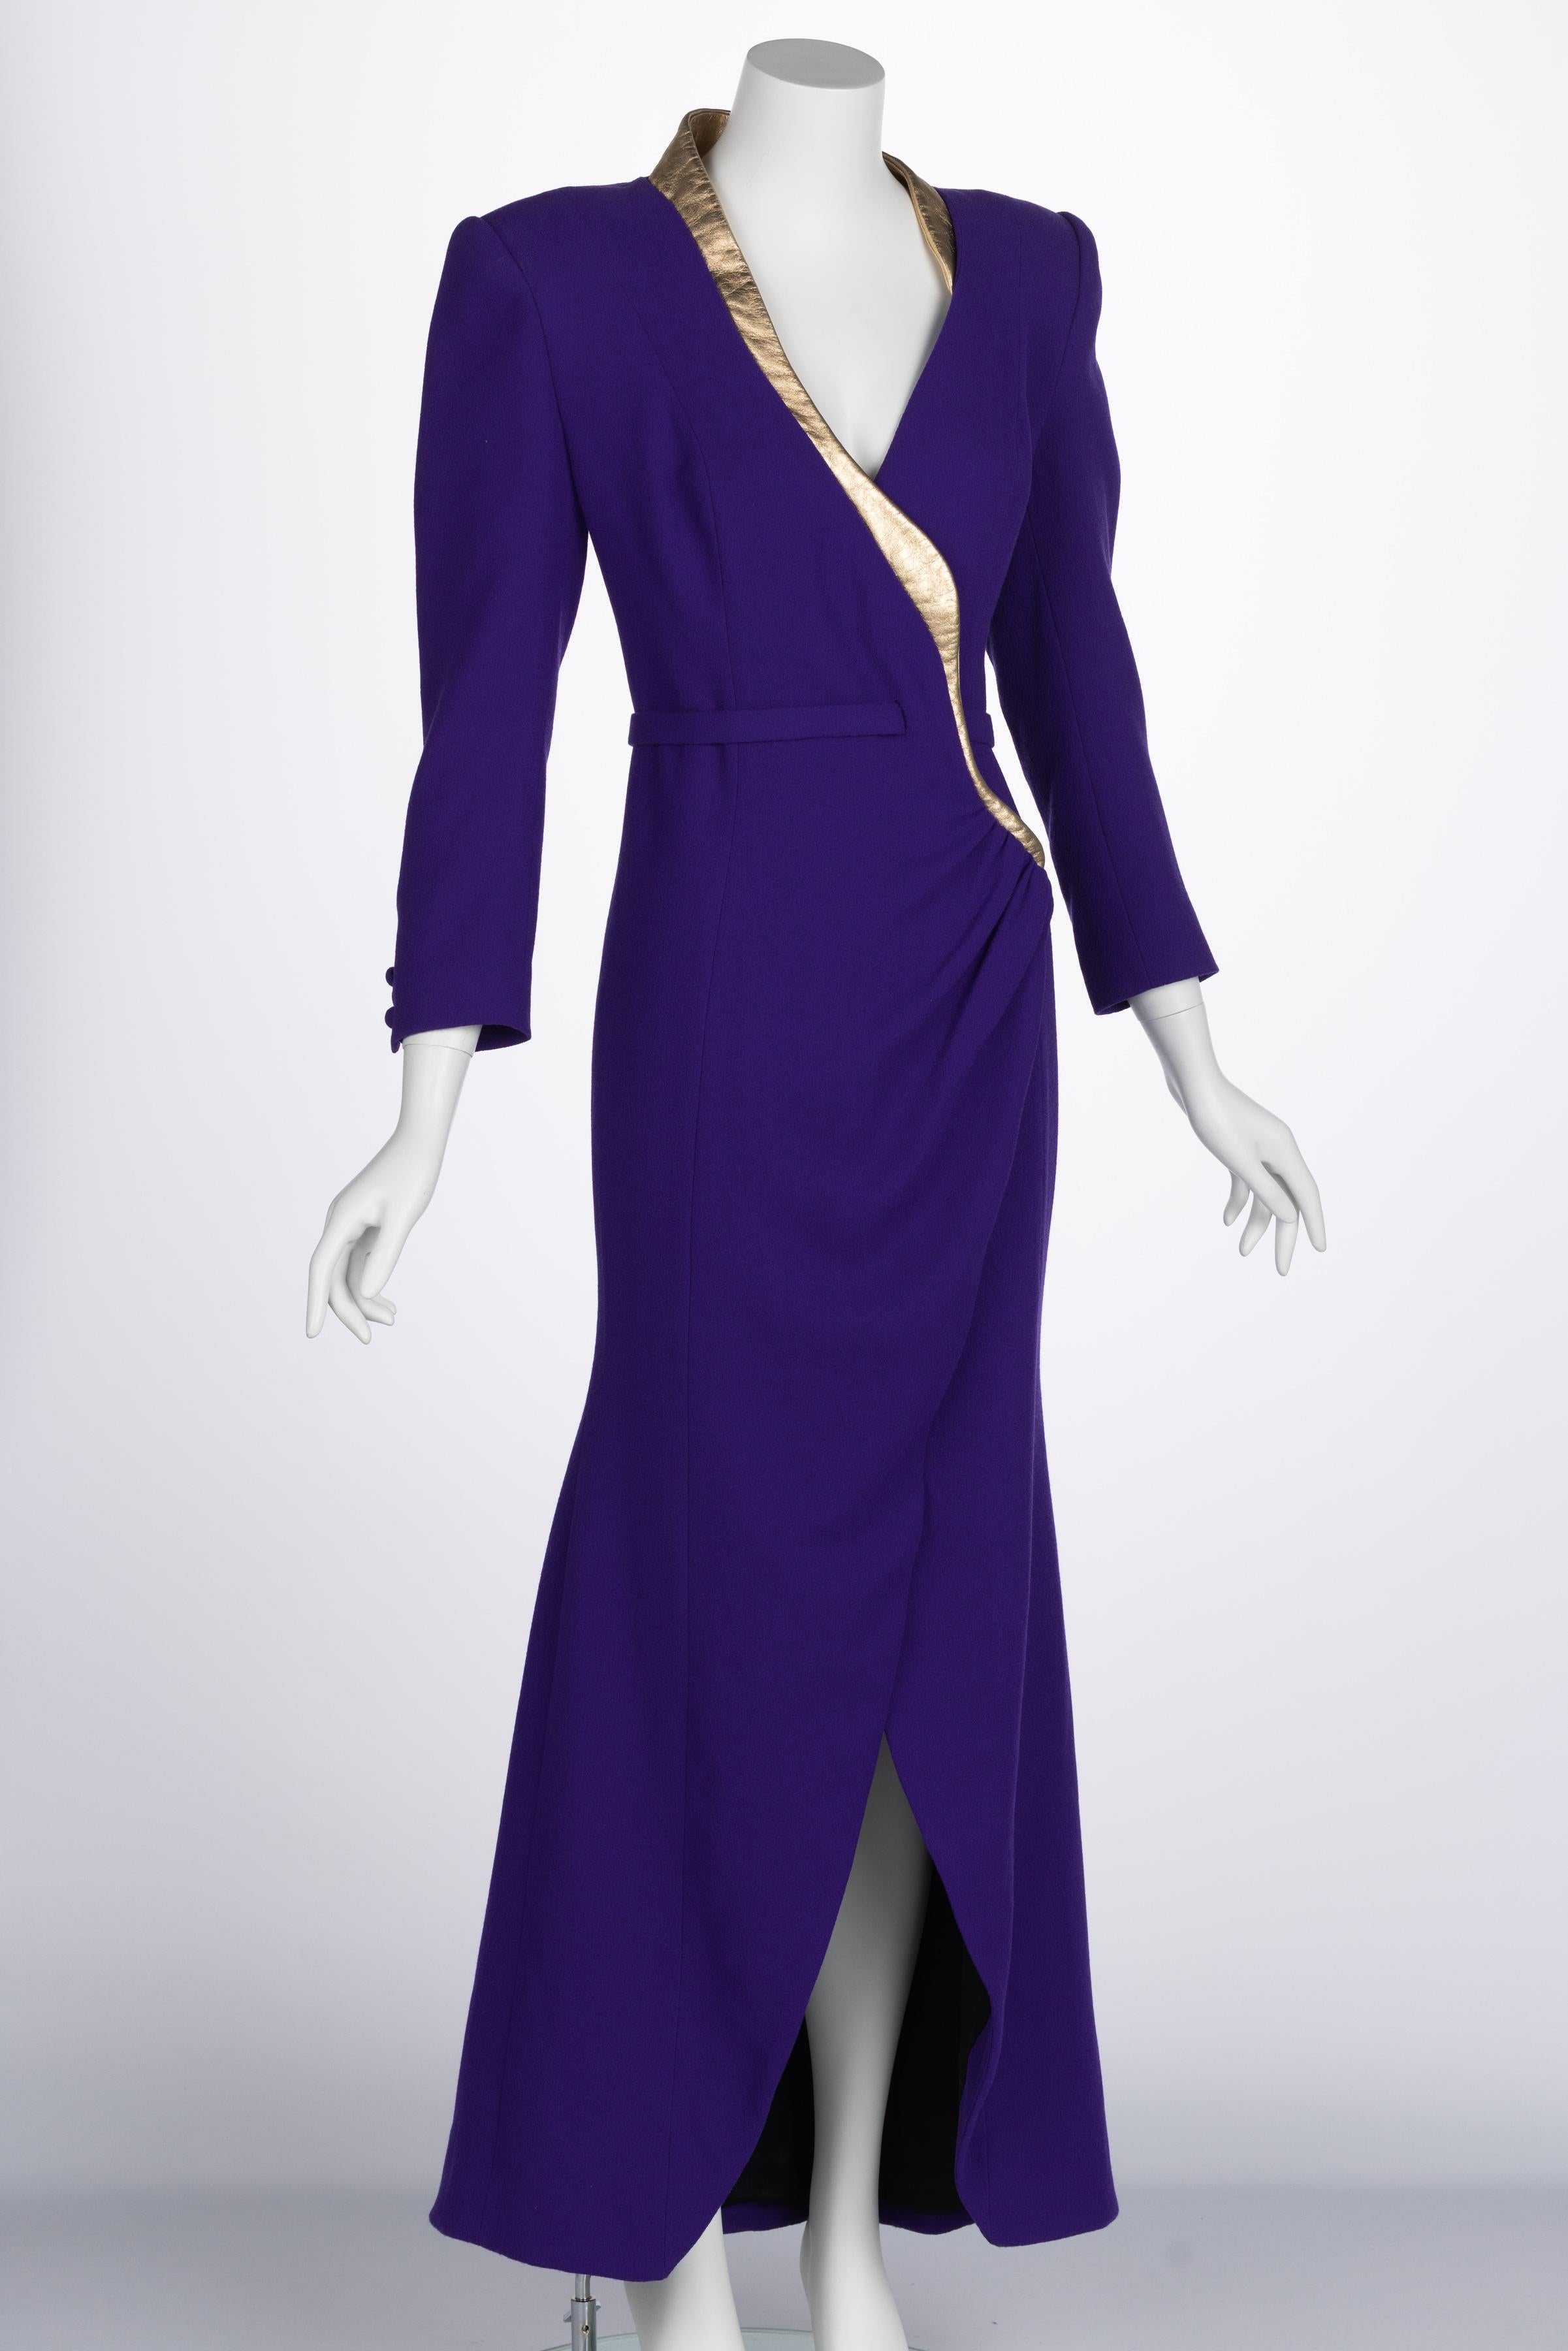 Ronald Van der kemp Haute Couture Dress, 2018 In Excellent Condition For Sale In Boca Raton, FL